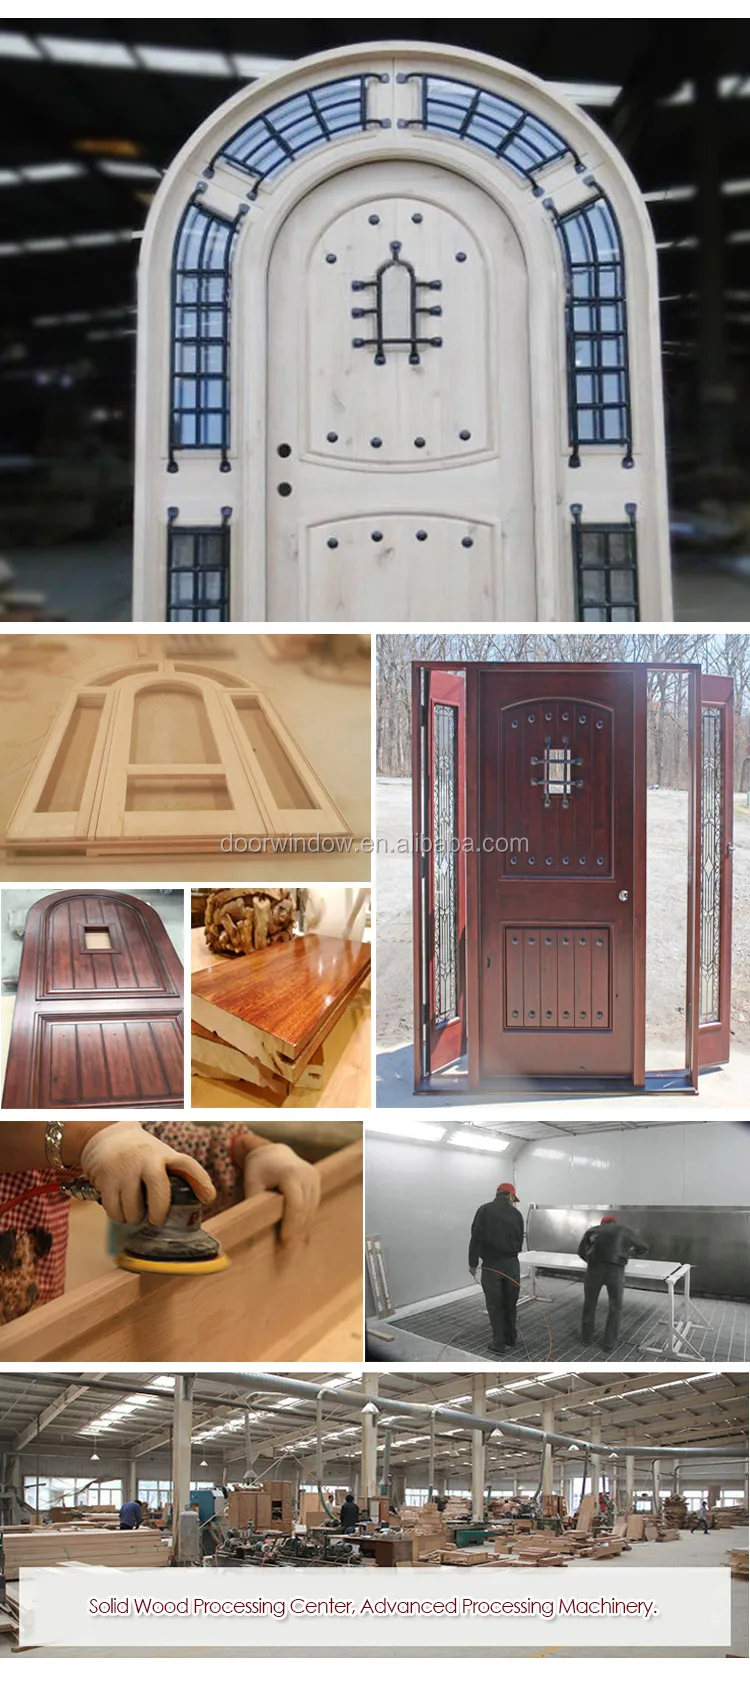 Double Main Arched top entry Door American rustic knotty alder mahogany wooden entry door